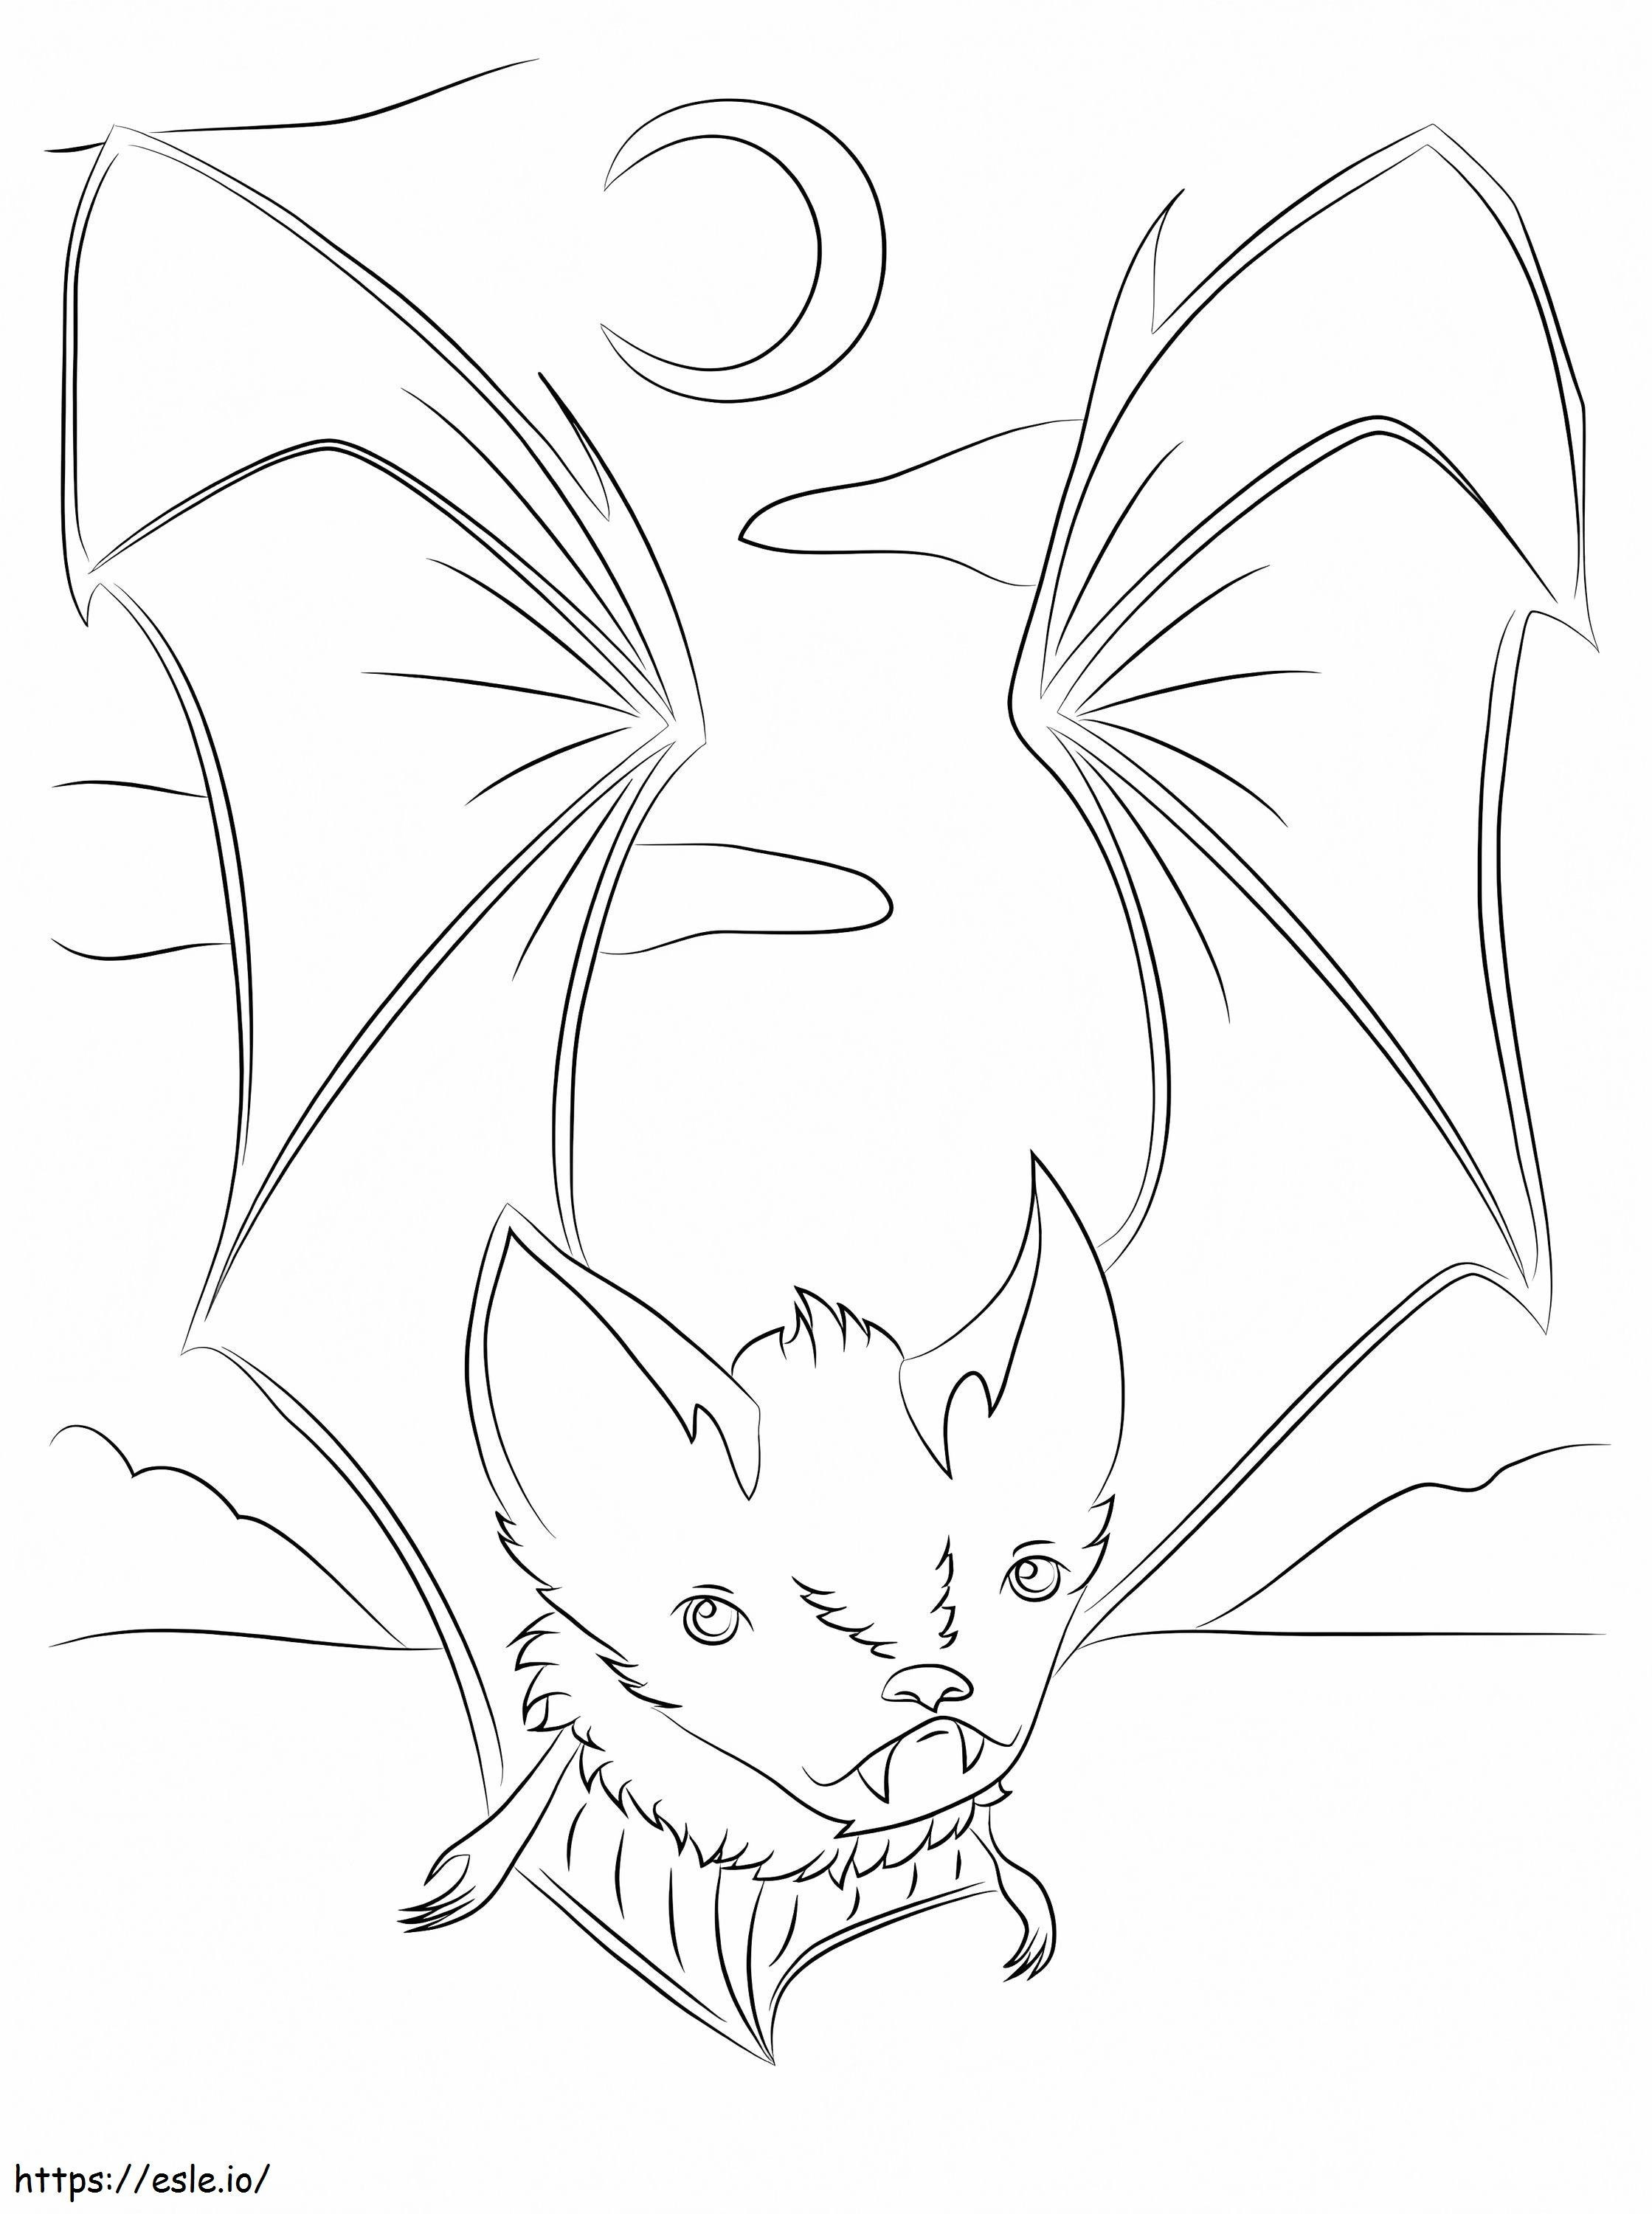 A Cute Bat coloring page